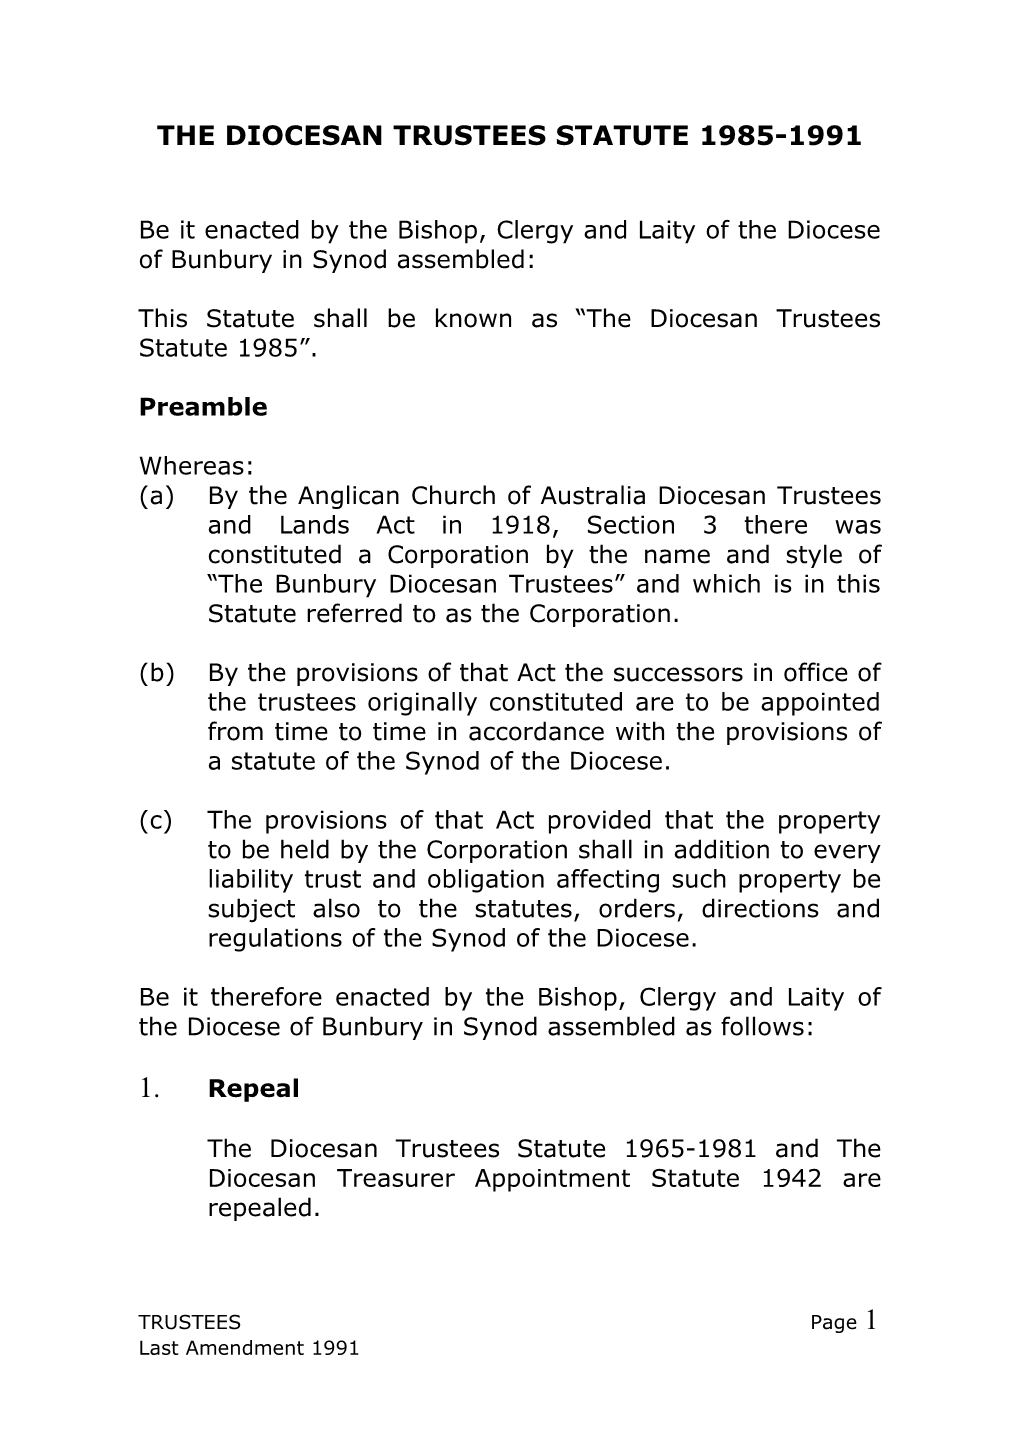 The Diocesan Trustees Statute 1985-1991